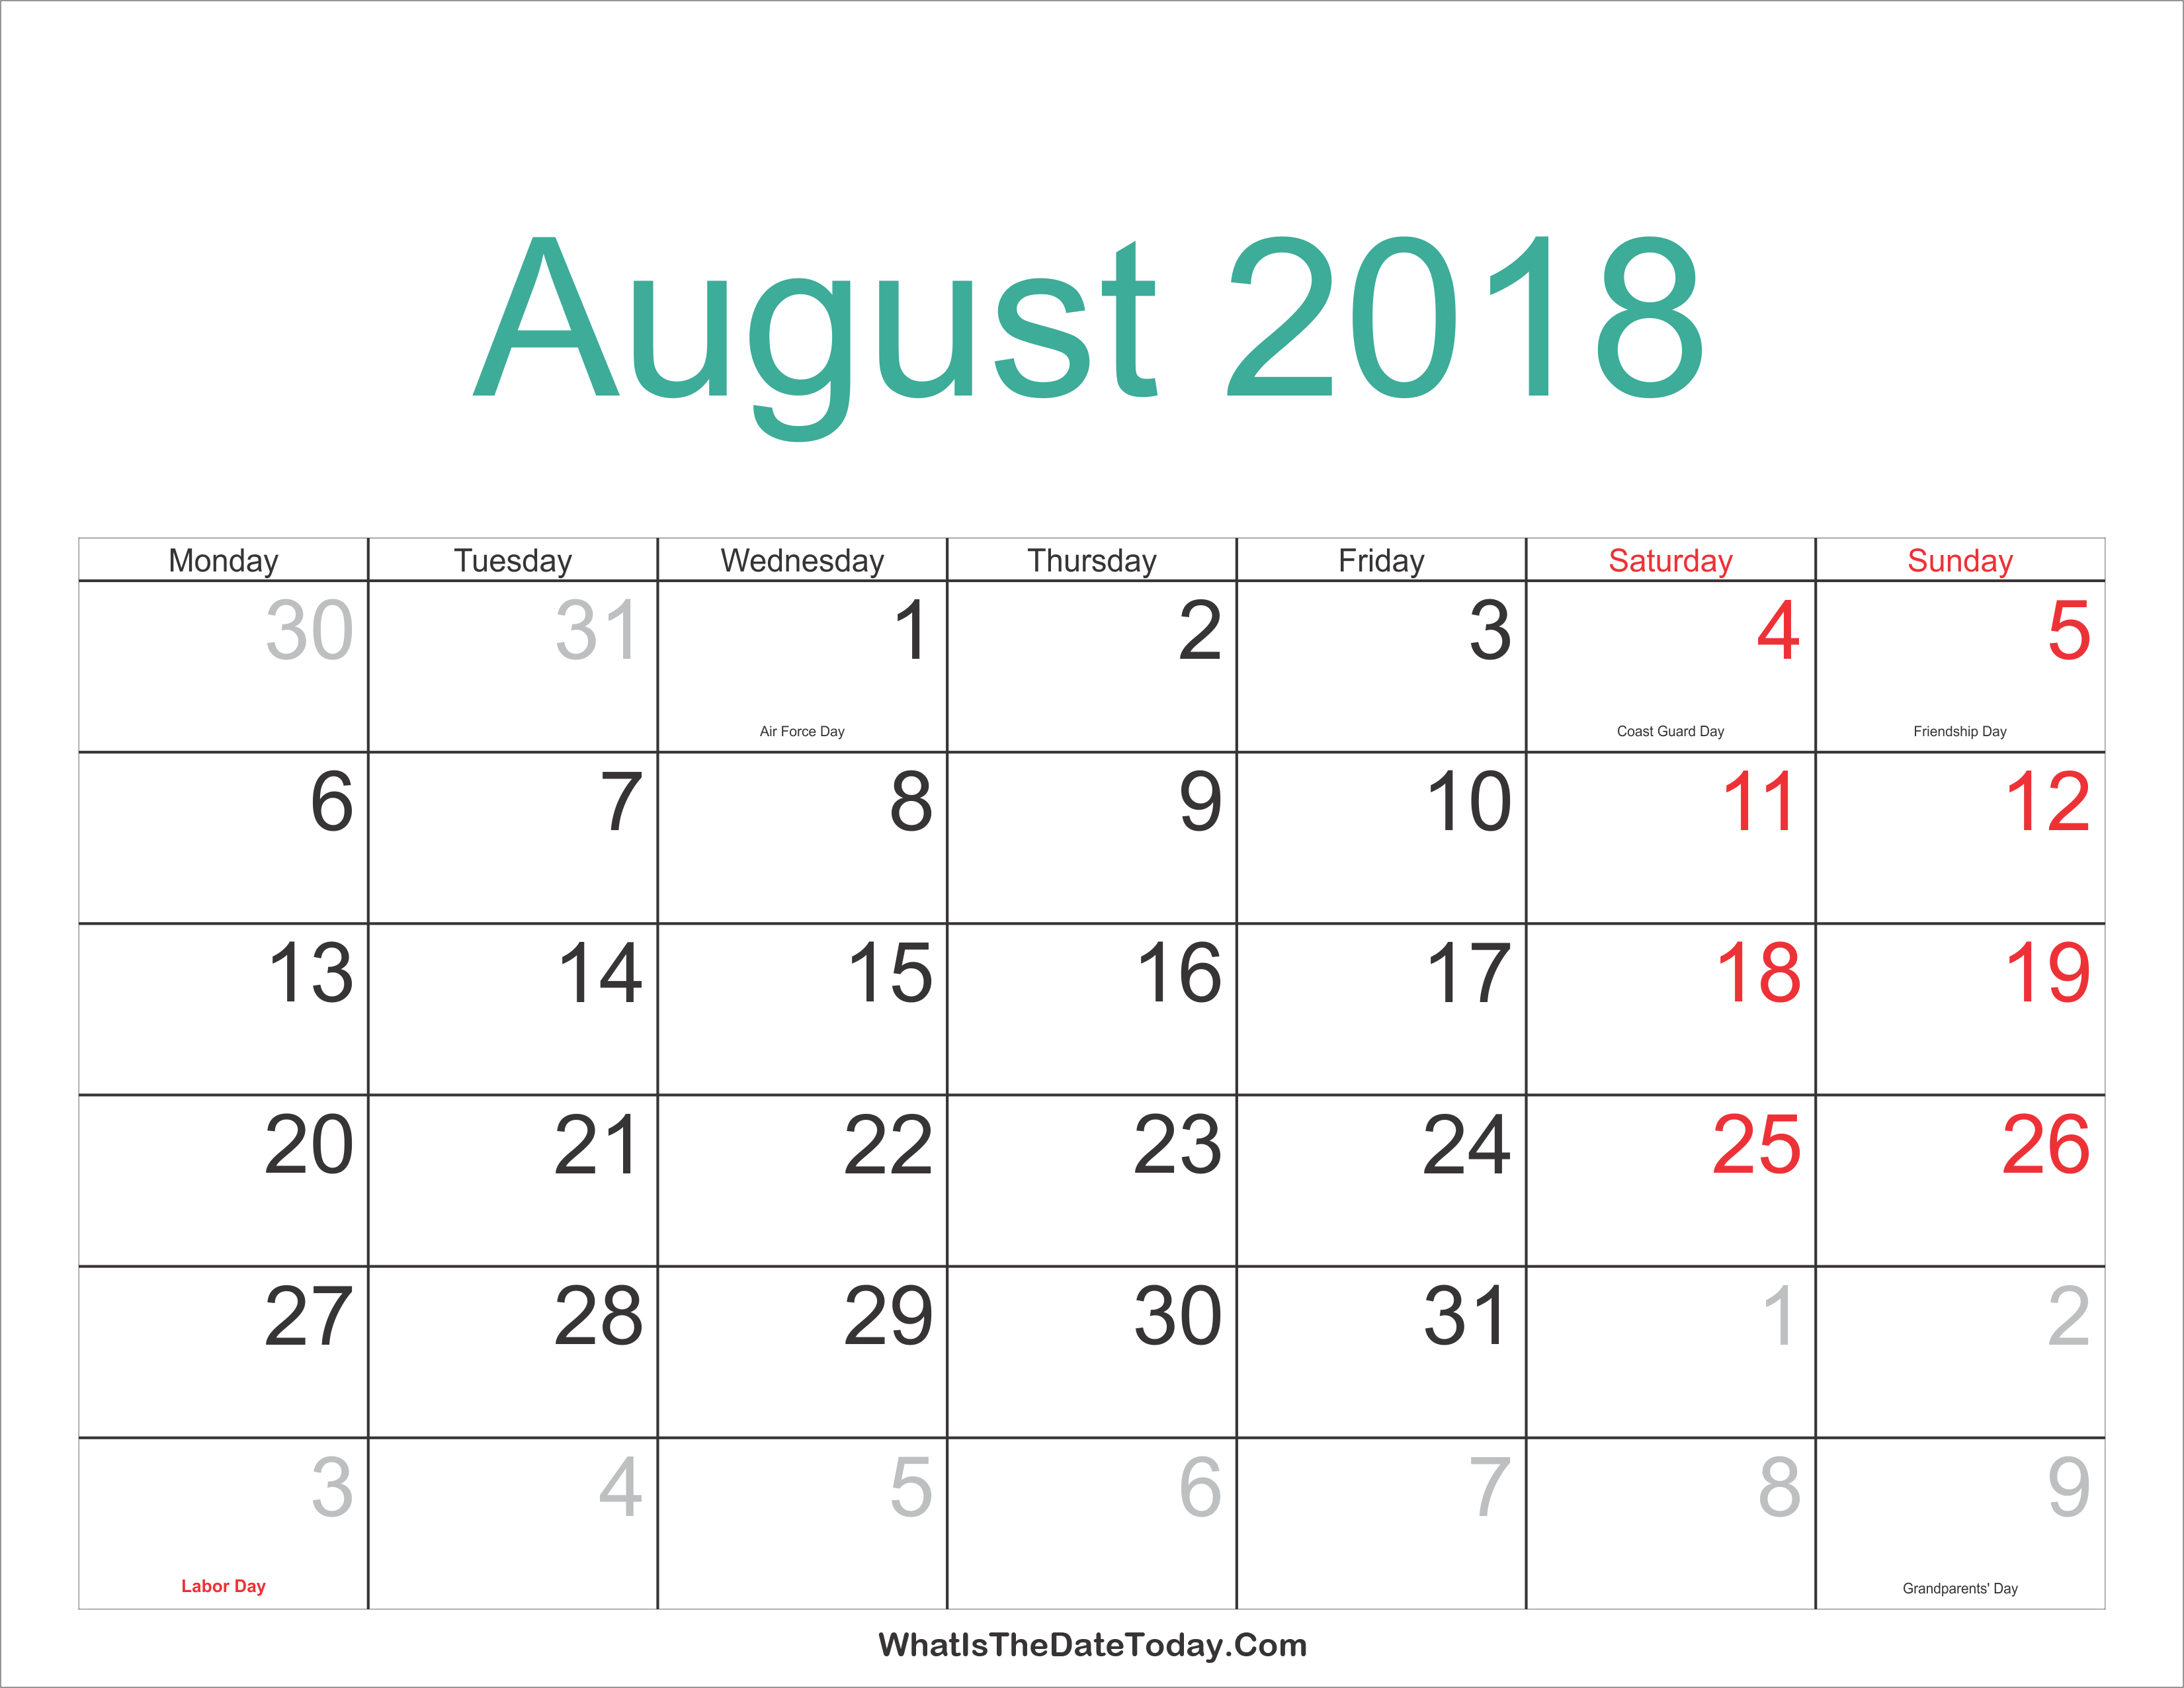 August 2018 Calendar Printable With Holidays Whatisthedatetodaycom